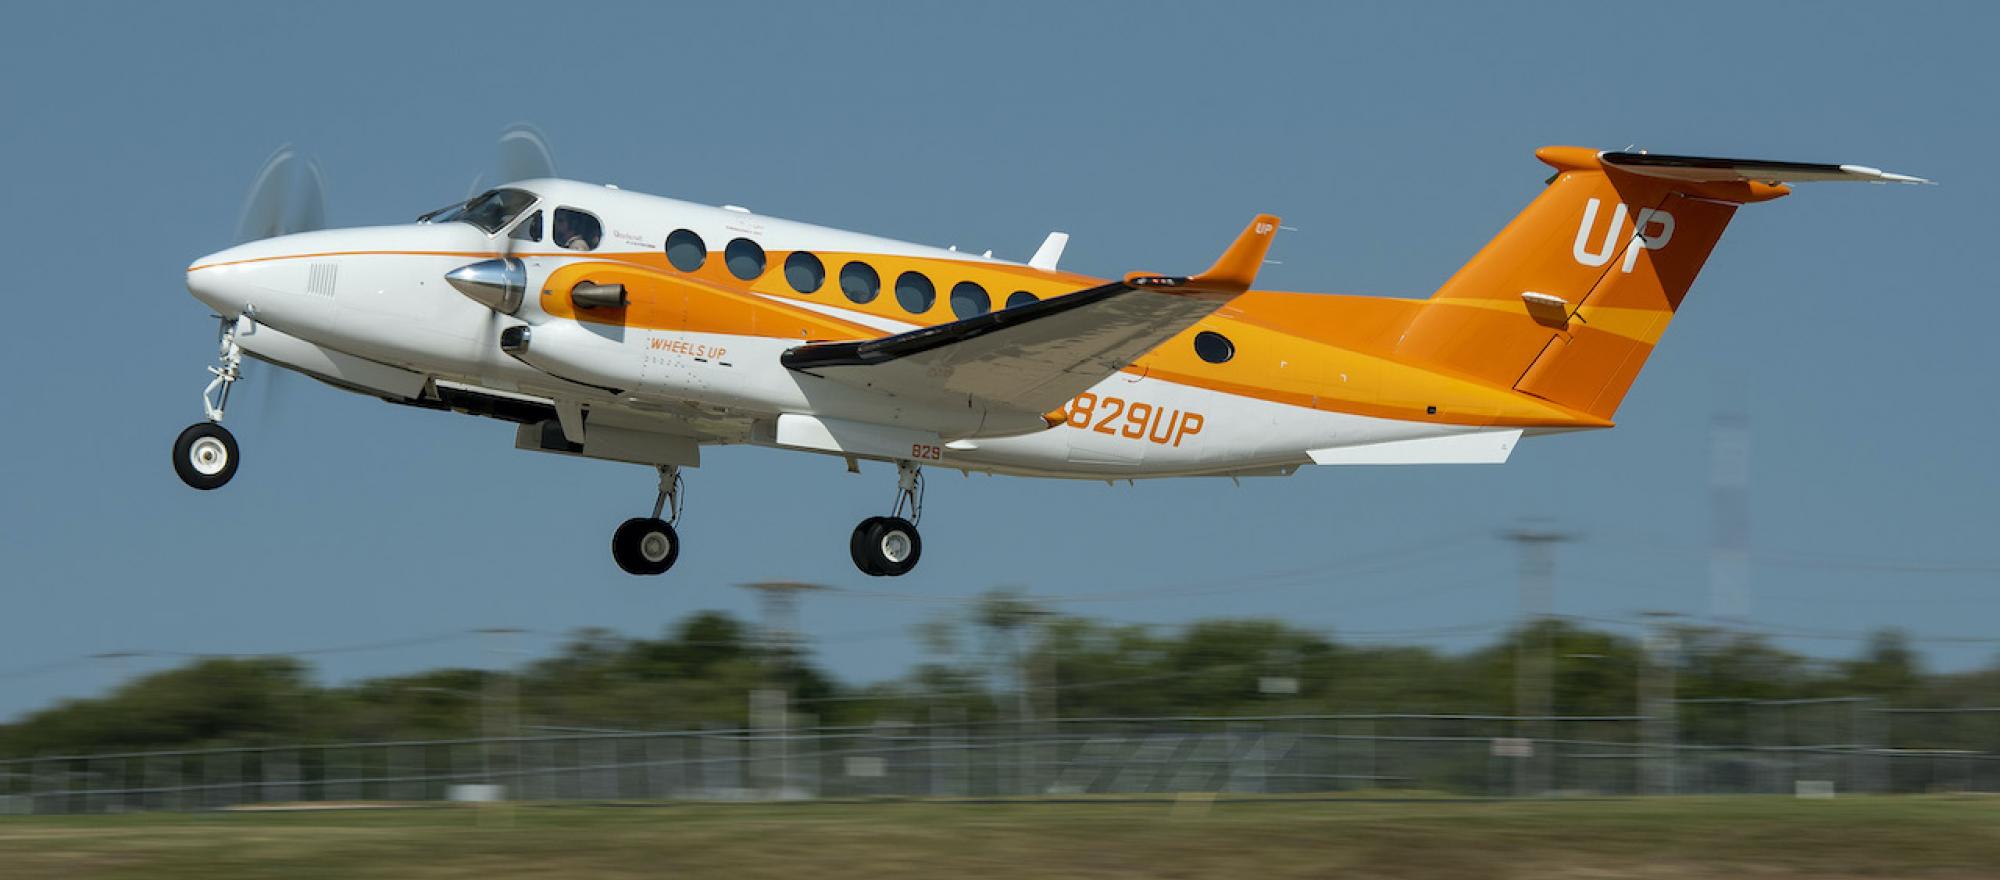 Wheels Up's orange Beechcraft King Air 350i